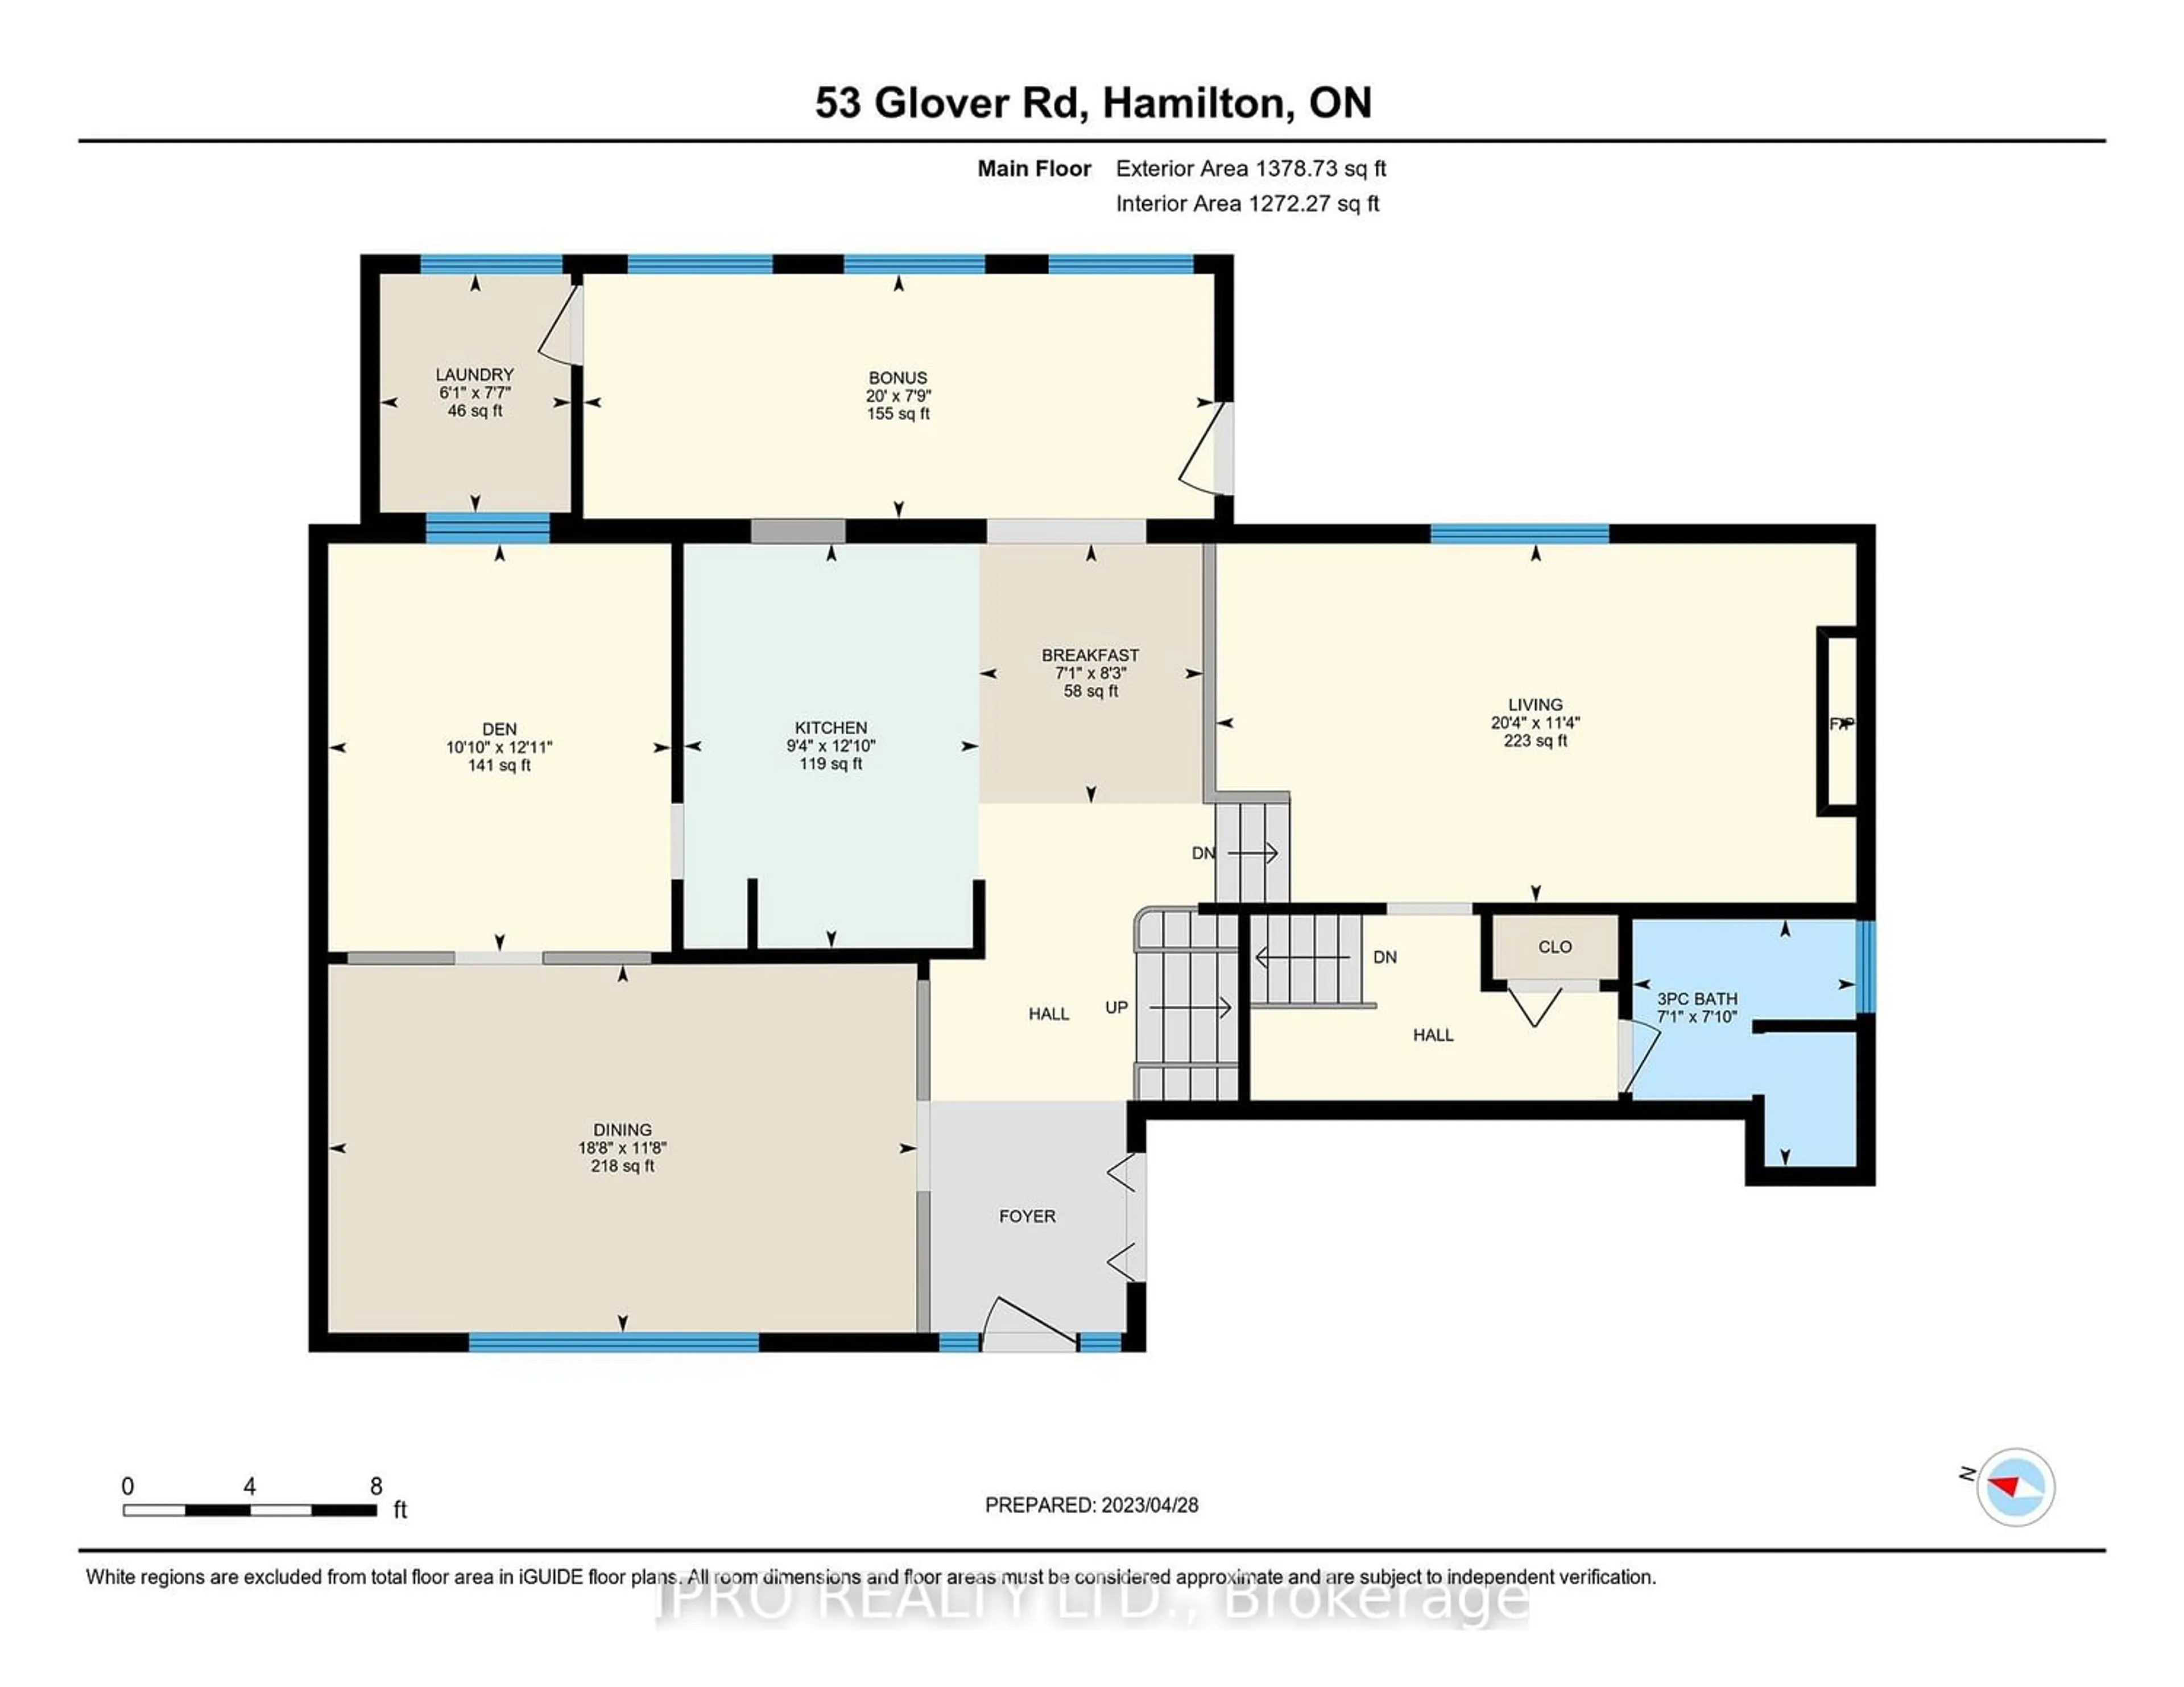 Floor plan for 53 Glover Rd, Hamilton Ontario L8W 3S8